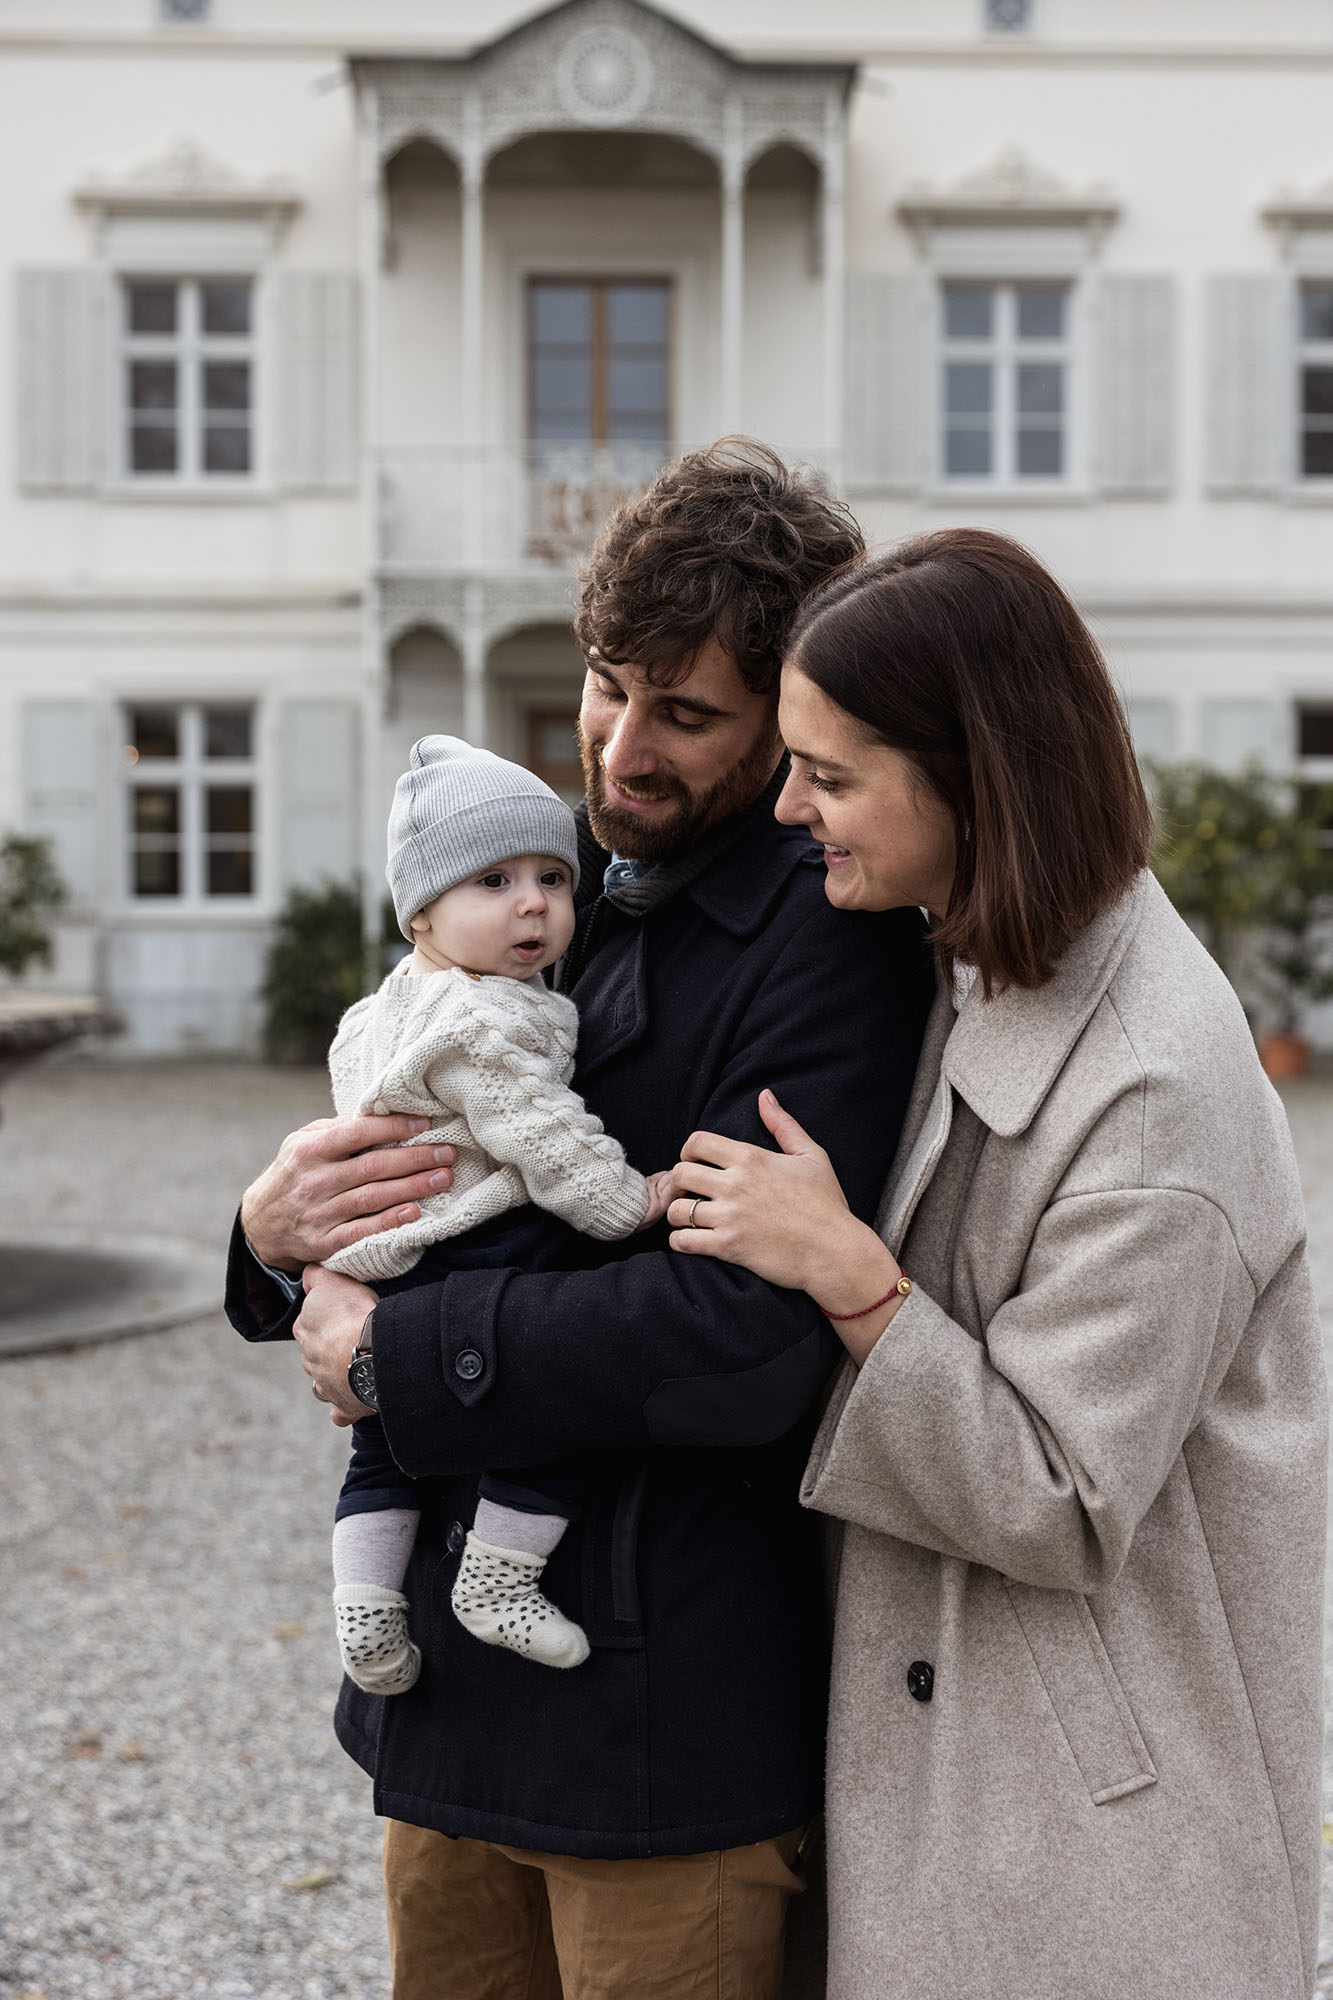 Professionelle Familienbilder - Familien Fotoshooting bei der Fotografin Nicole.Gallery aus Basel